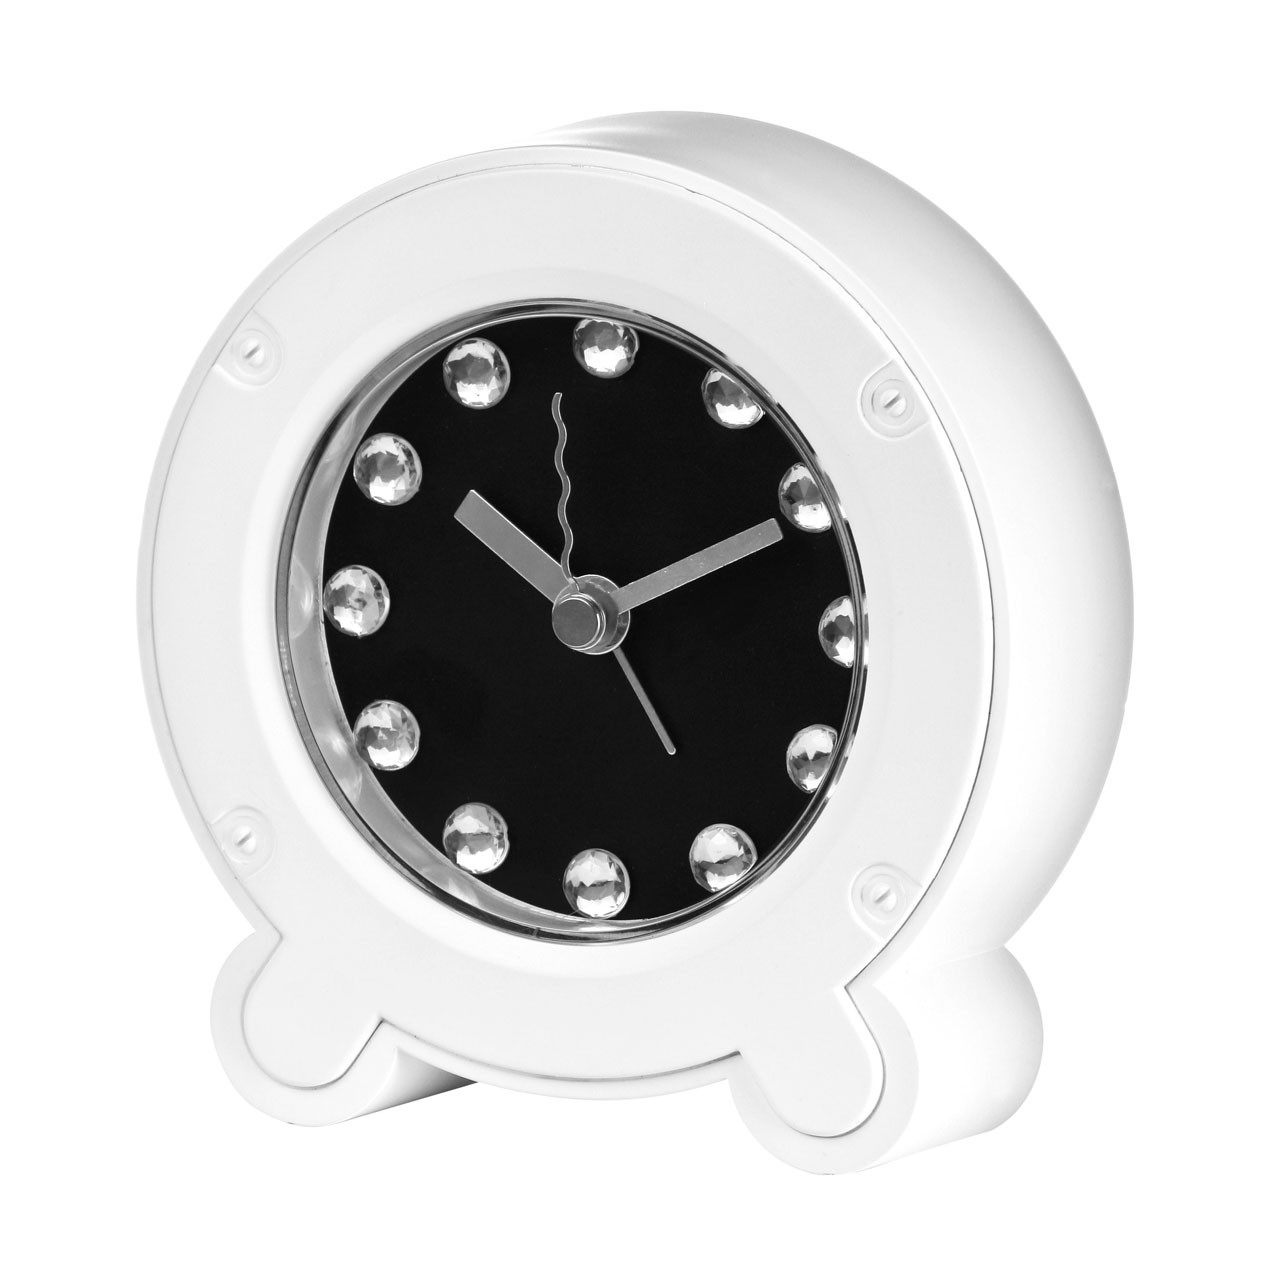 Alarm Clock, Plastic and Acrylic